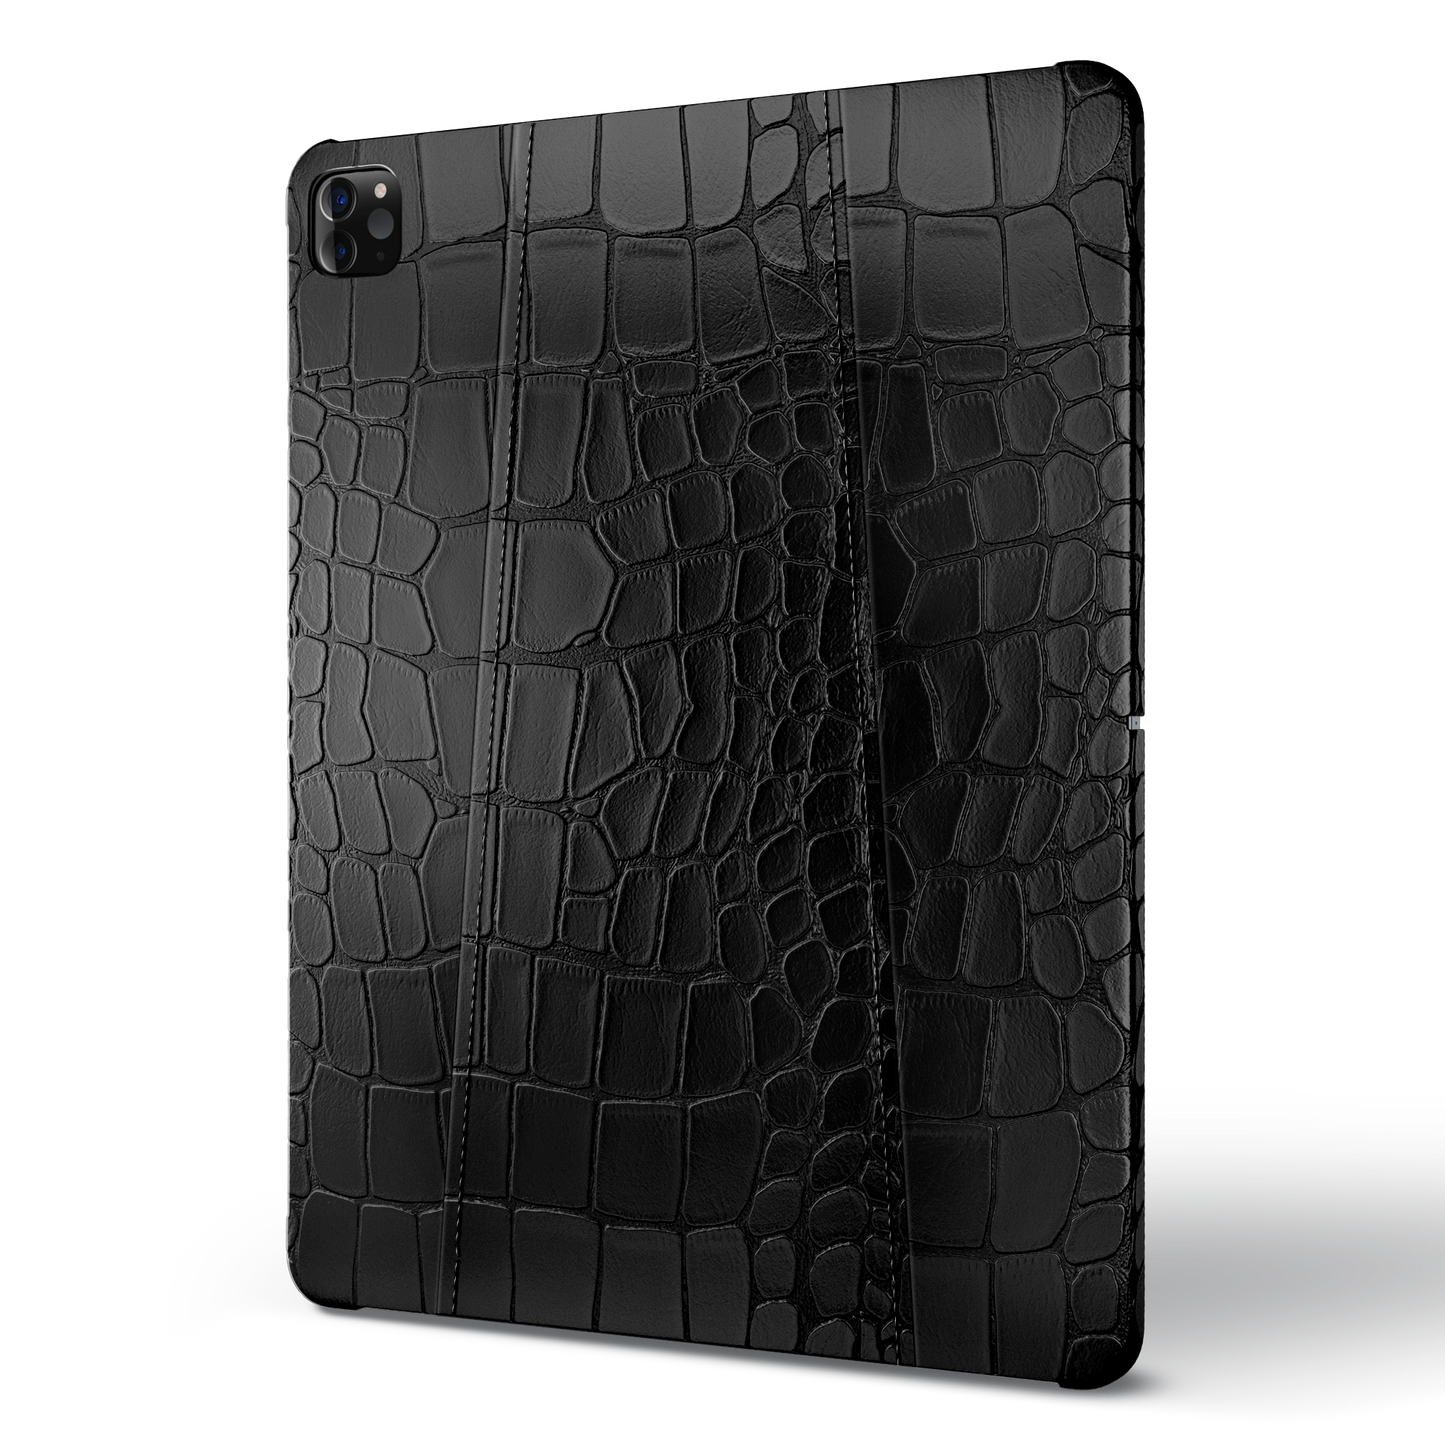 Ipad Pro (5th Gen) 12.9-inch Black Alligator Case